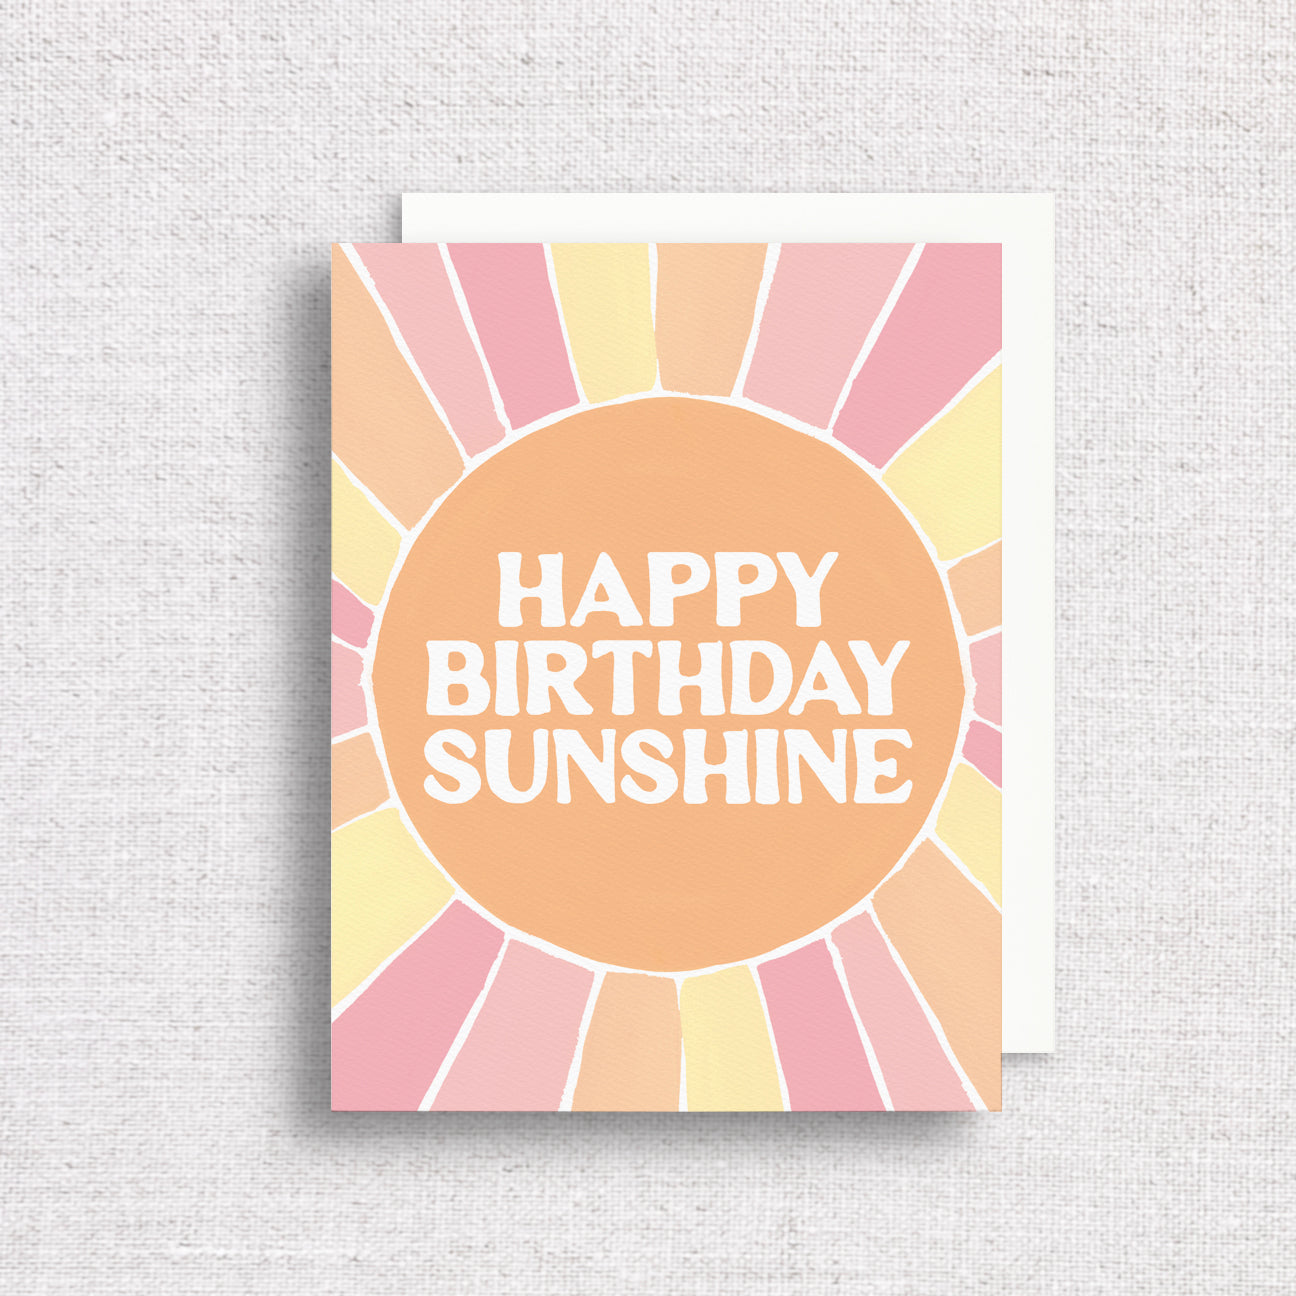 Happy Birthday Sunshine Greeting Card by Gert & Co